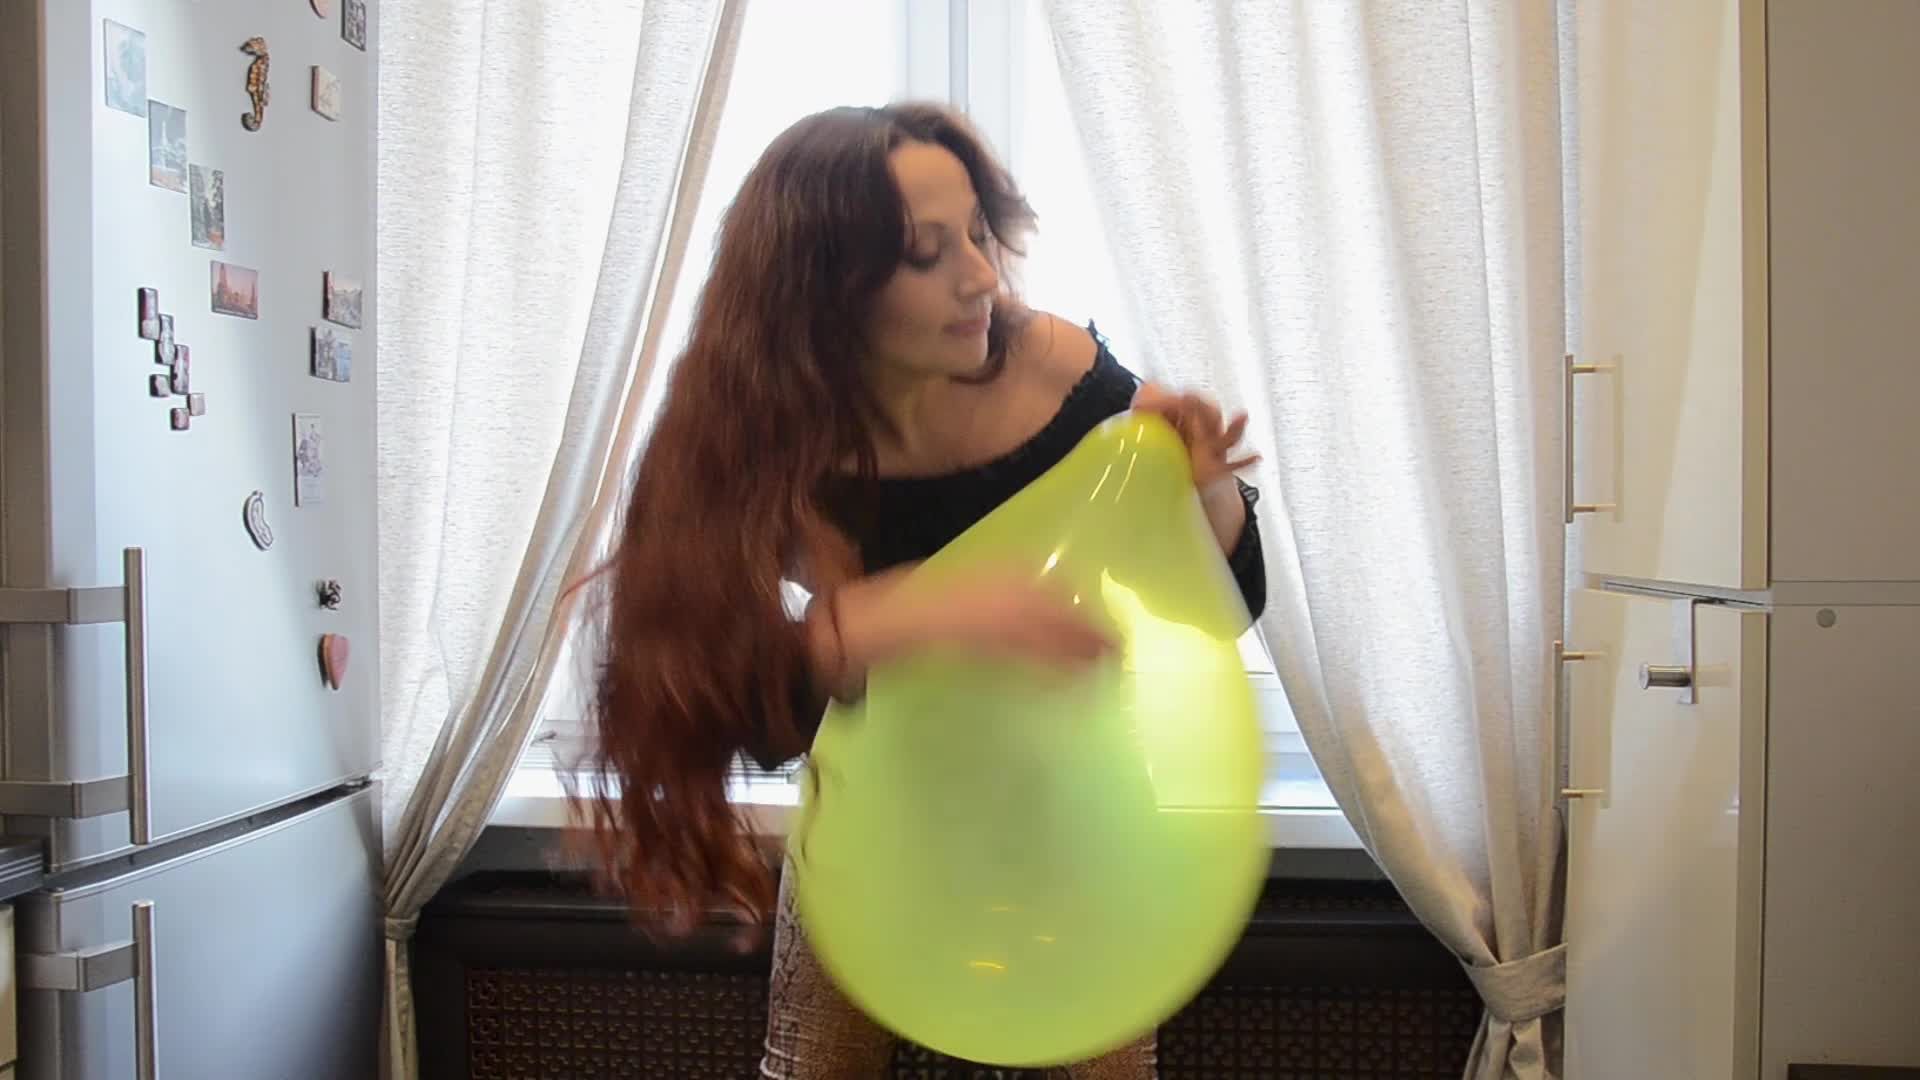 Nathalie Blows To Pop Yellow Balloon